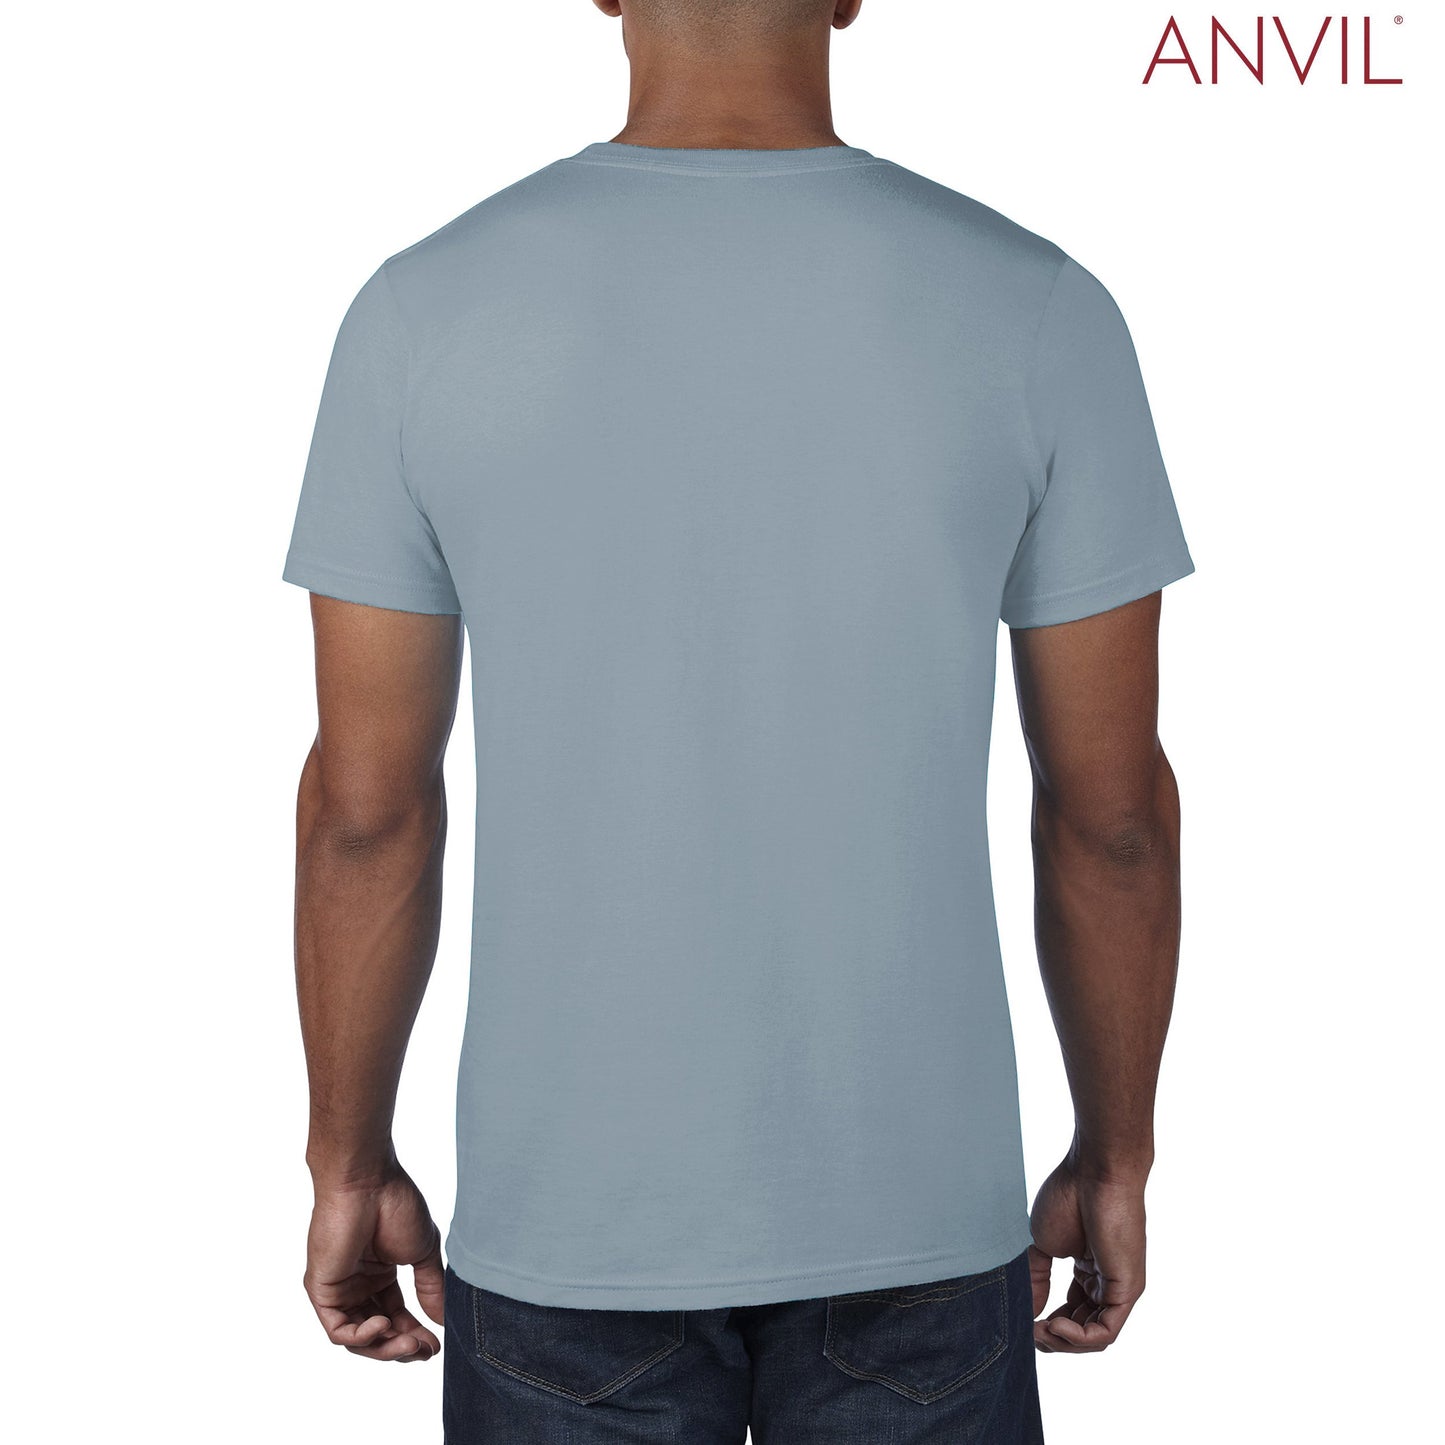 790 Anvil Adult Urban T-Shirt